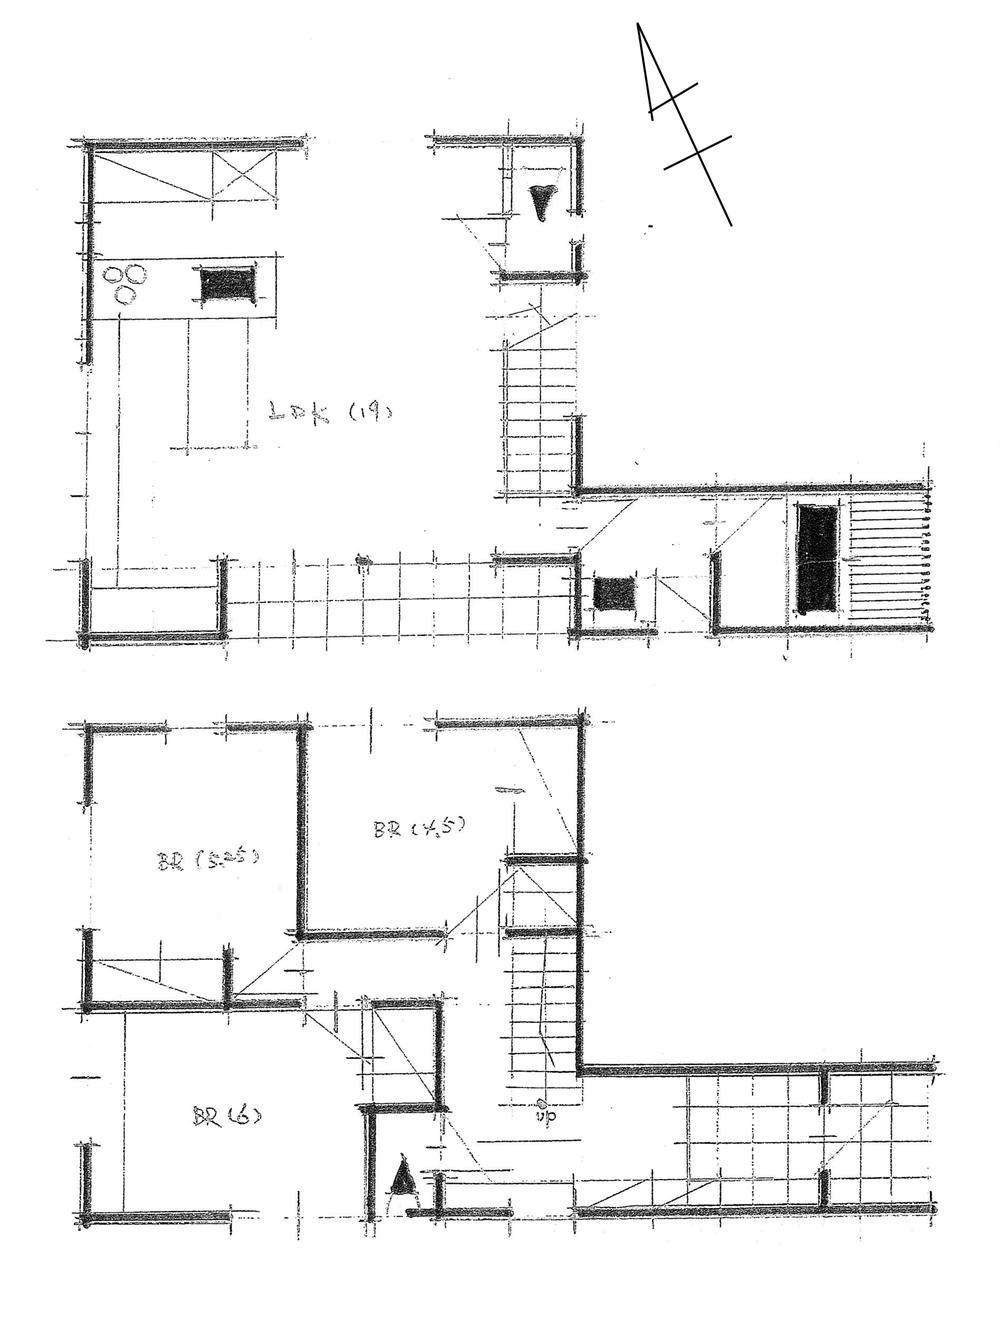 Building plan example (floor plan). Building plan example (B No. land) Building price 13 million yen